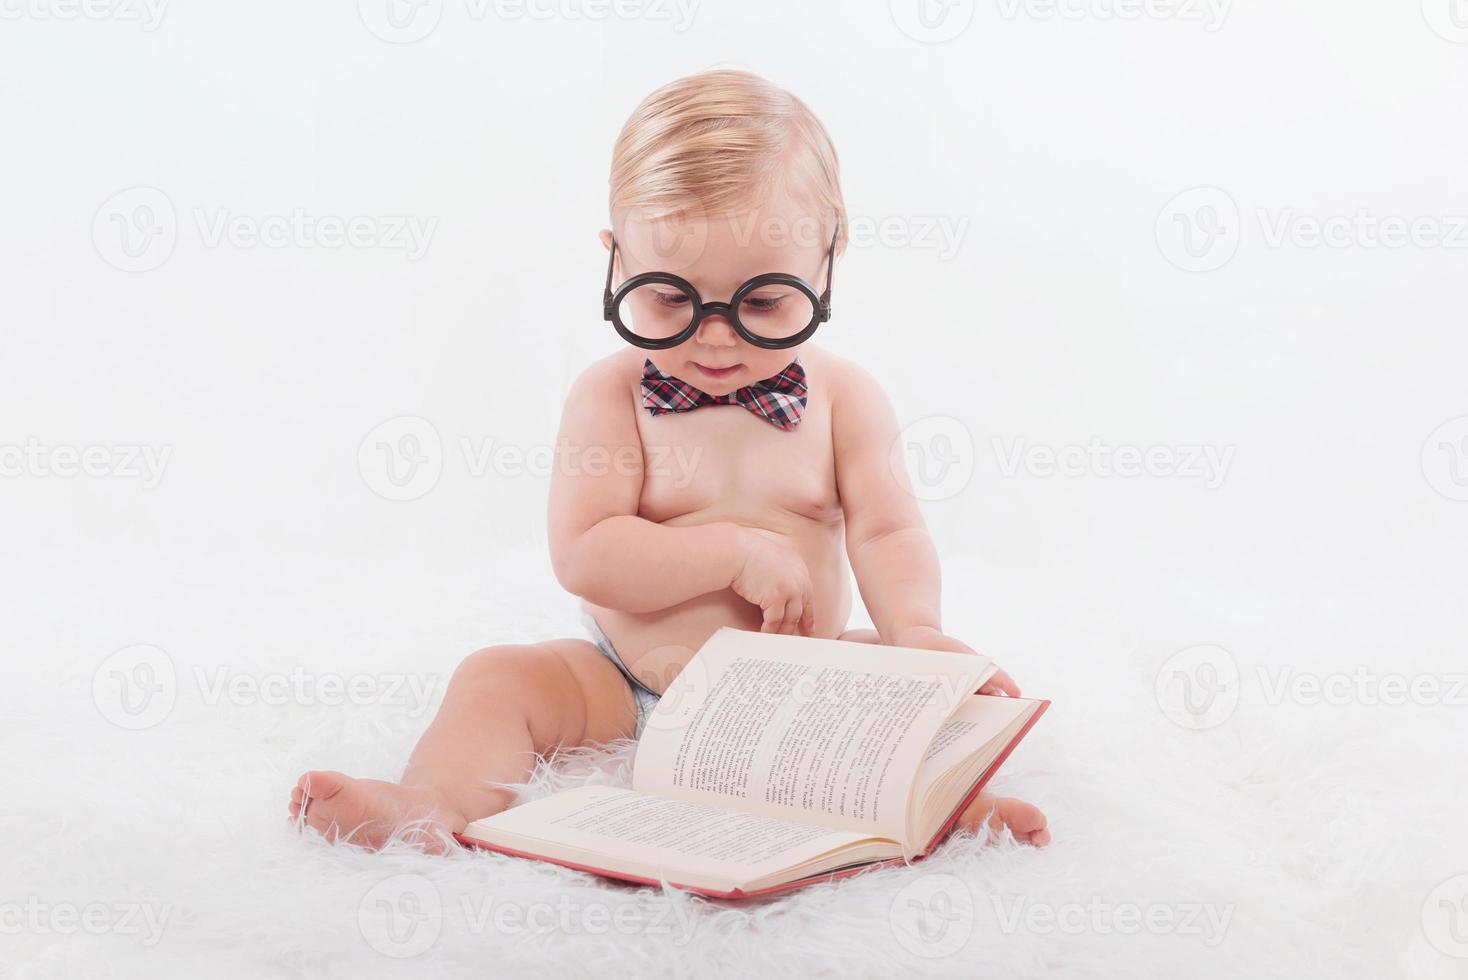 bambino che legge un libro foto